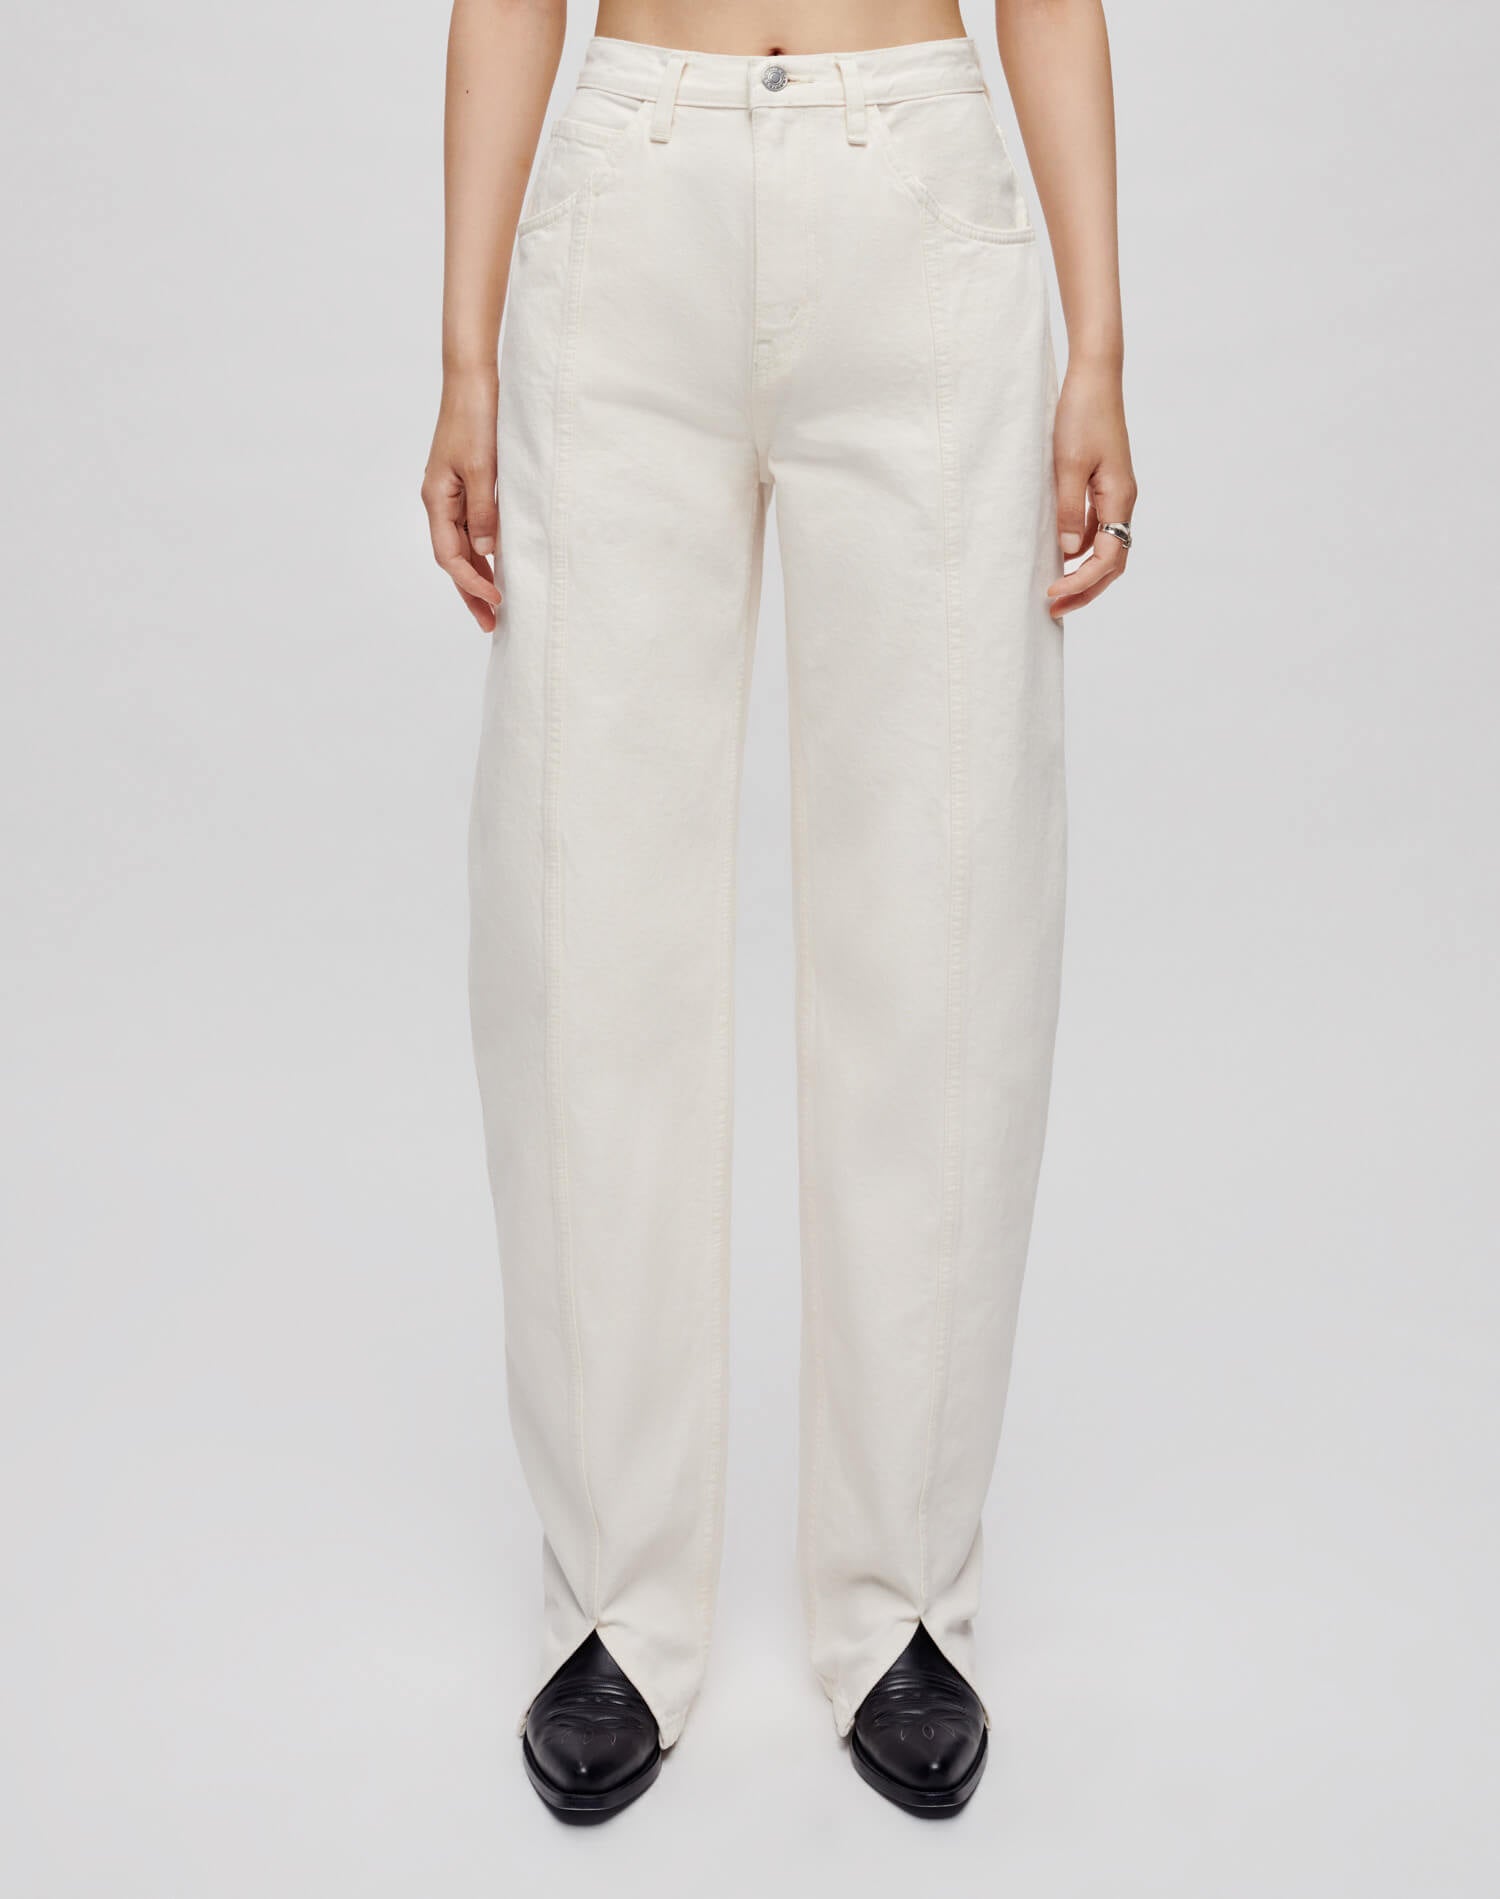 Tailored Jean - Vintage White